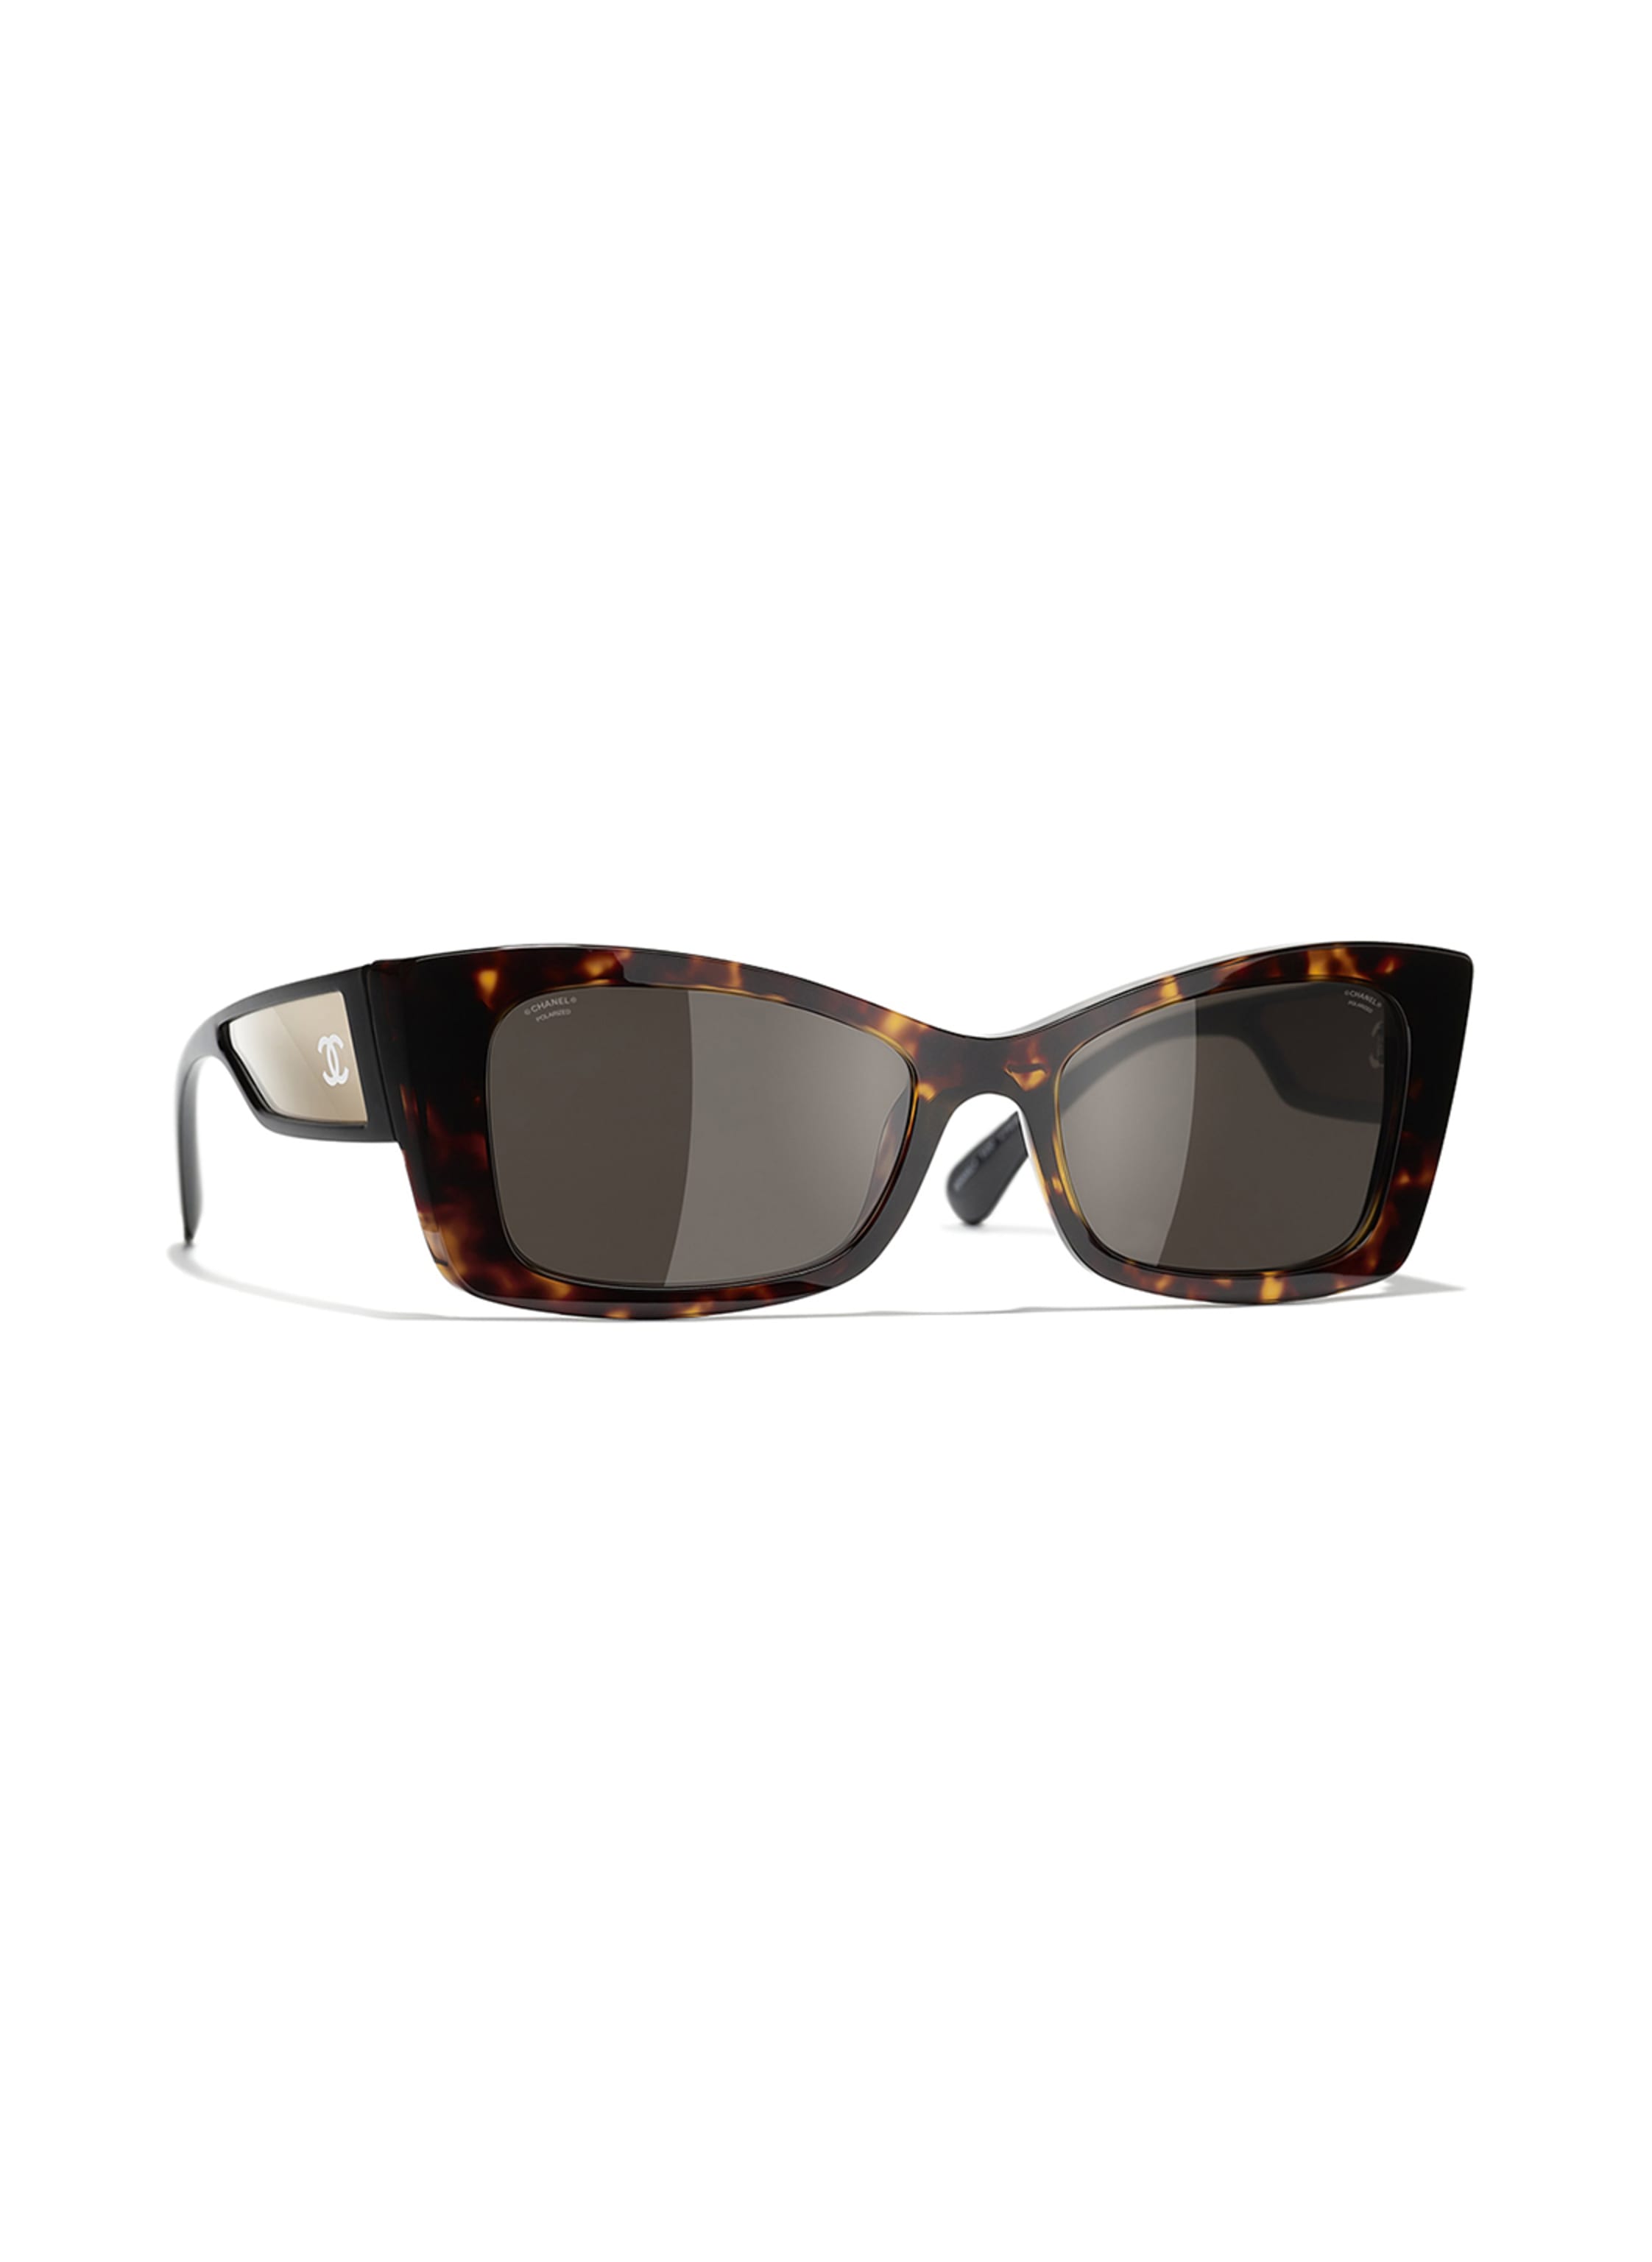 CHANEL Rectangular sunglasses in c71483 - havana/ brown polarized